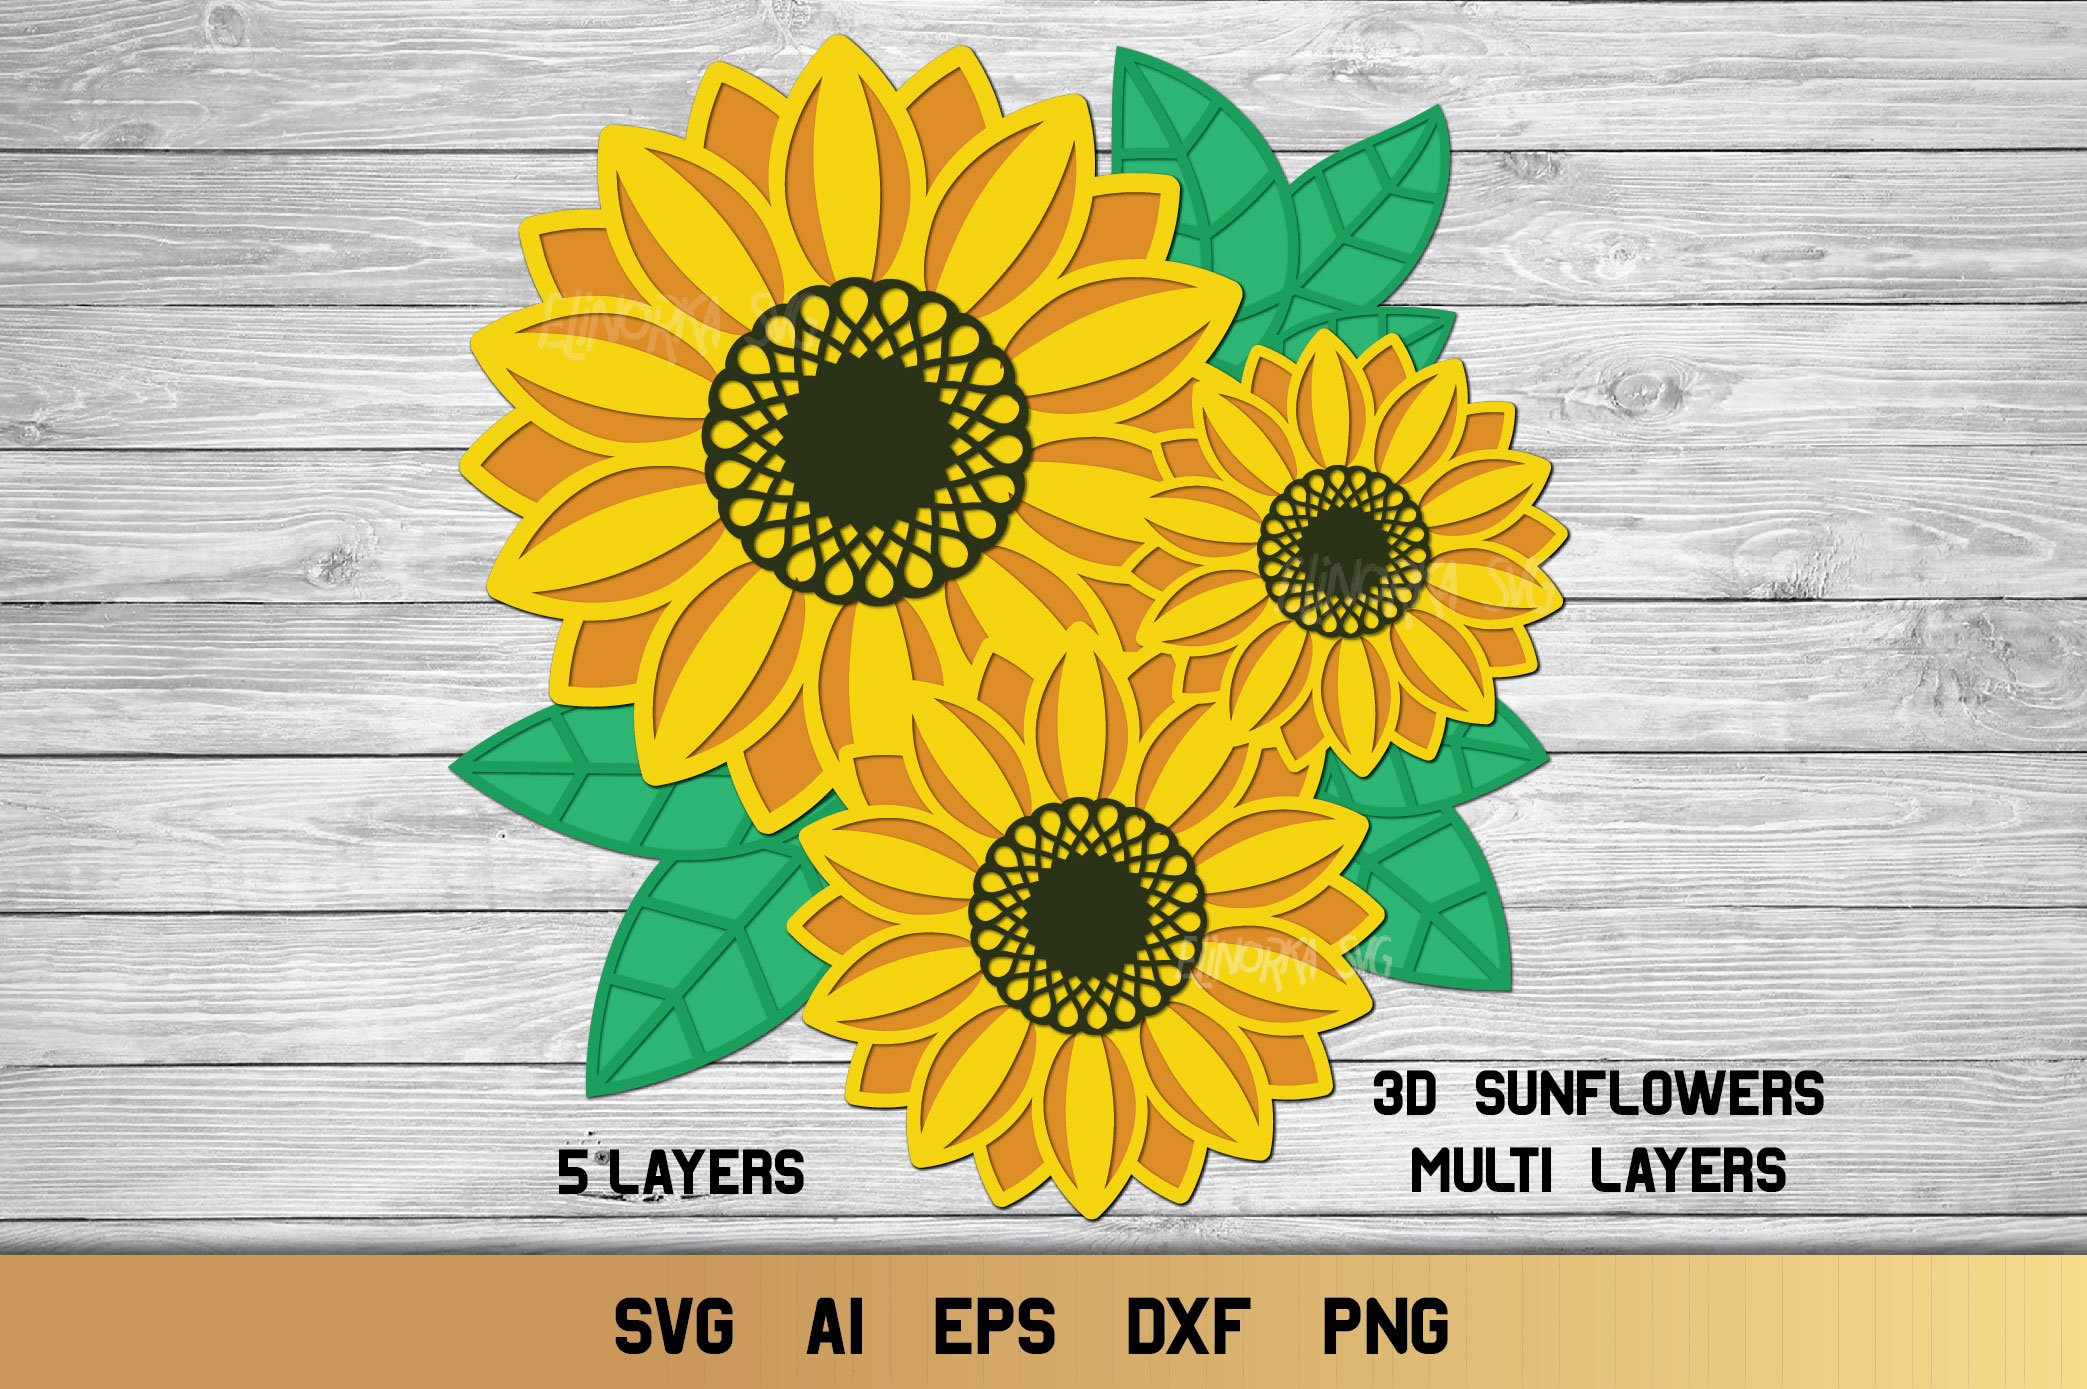 96+ layered sunflower svg free - Download Free SVG Cut Files | Freebies